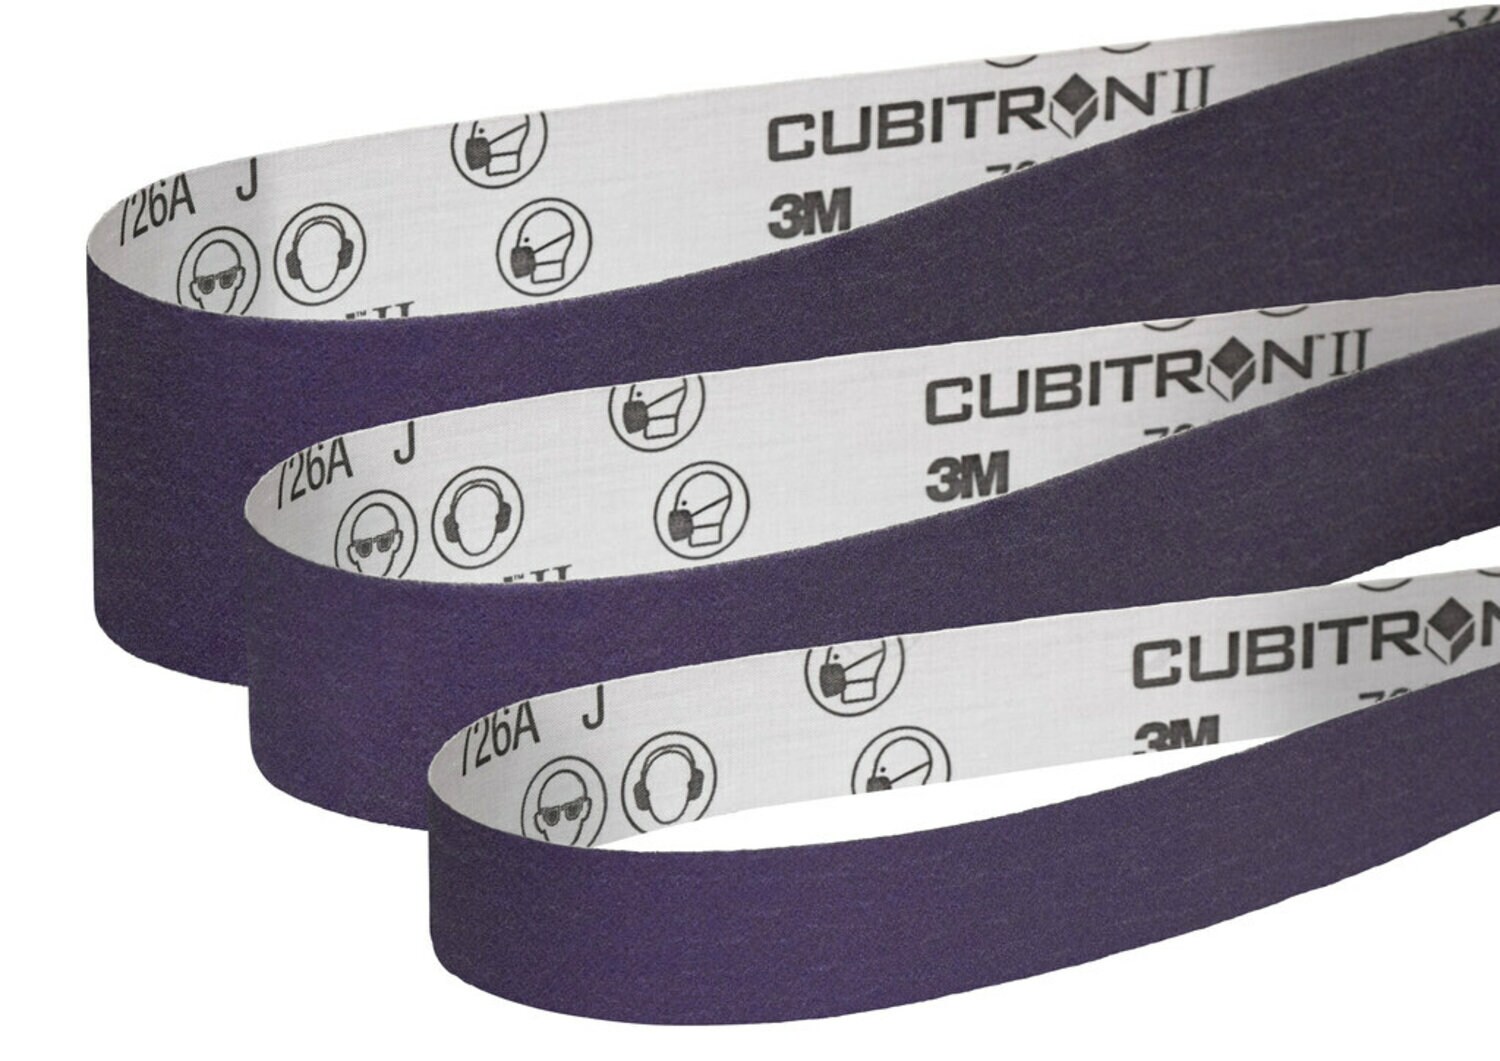 7100289605 - 3M Cubitron II Cloth Belt 726A, 240+ J-weight, Config